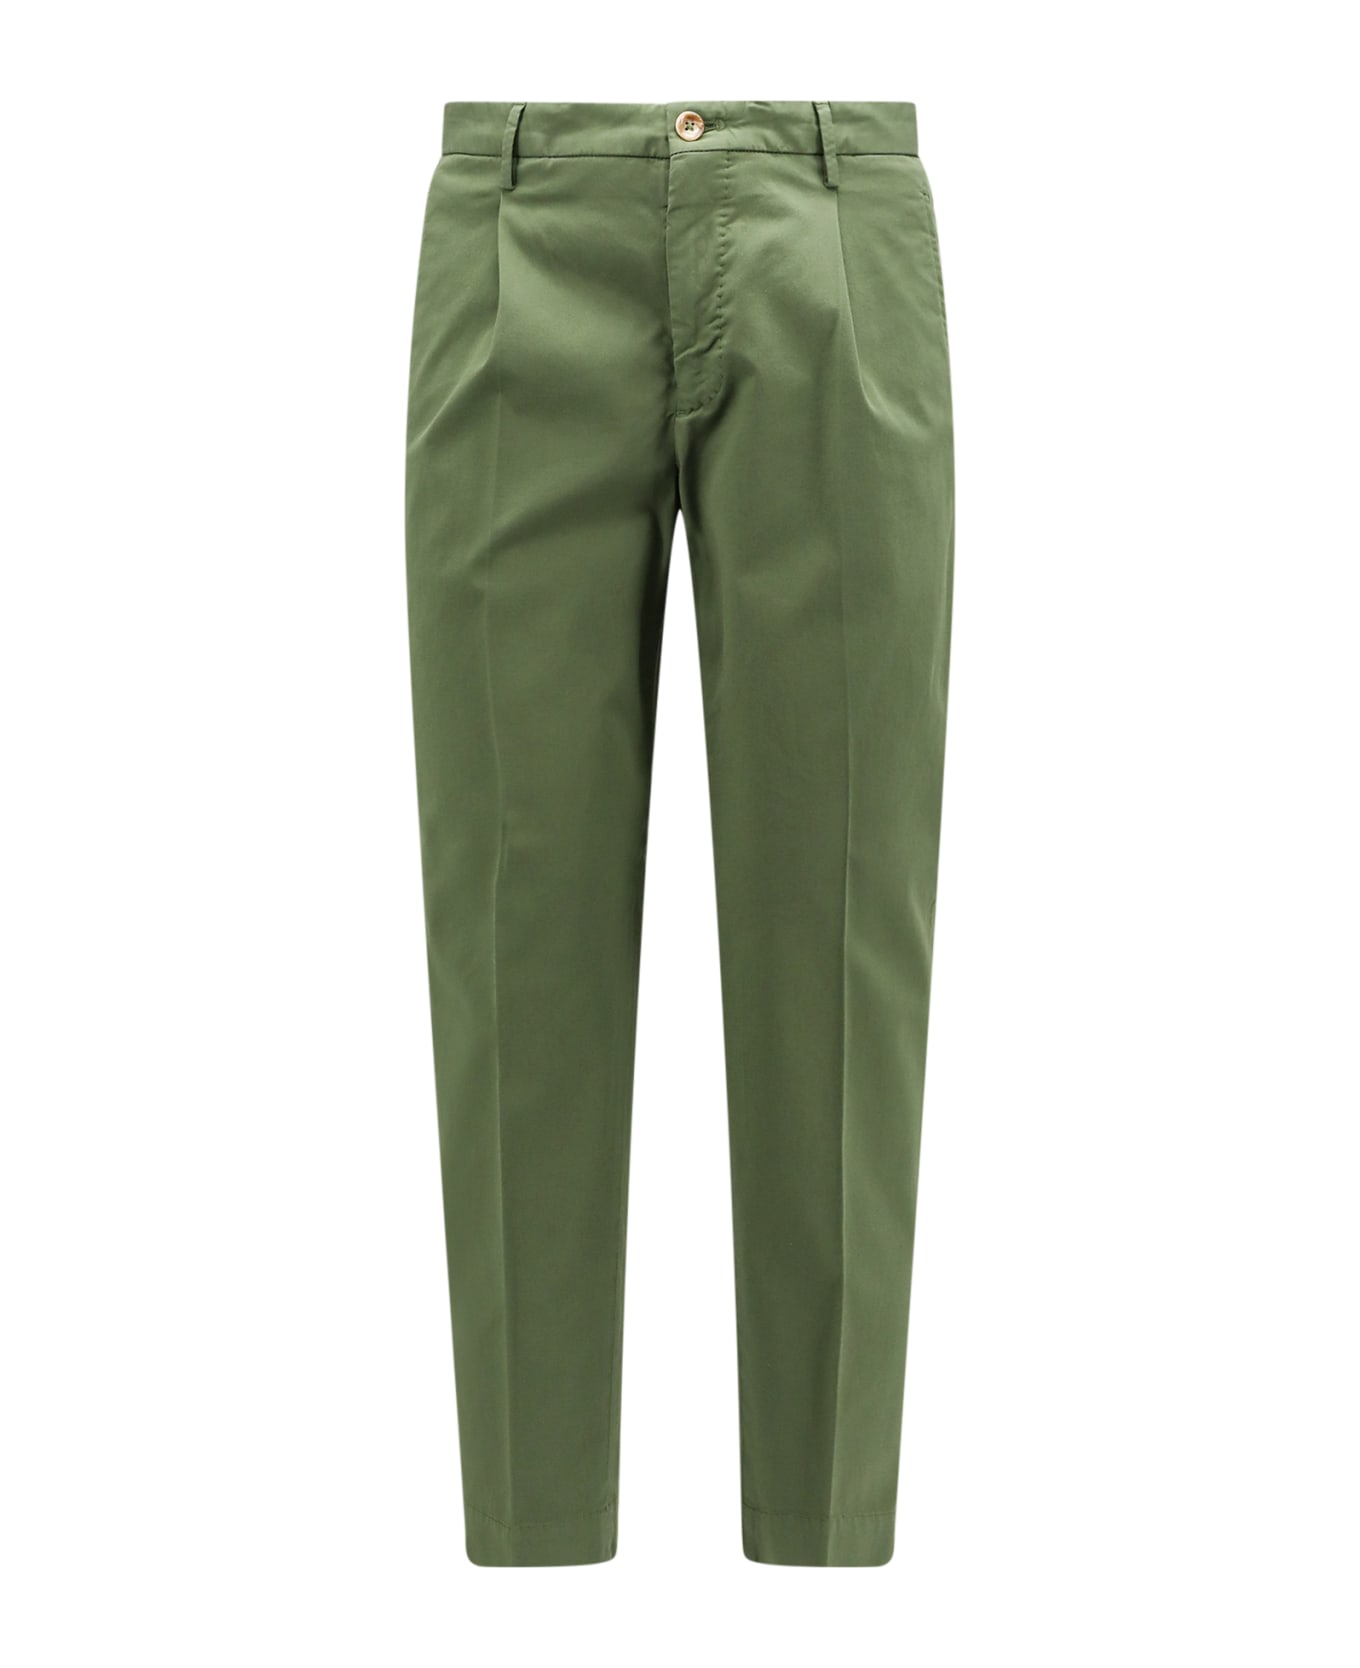 Incotex 54 Trouser - Green